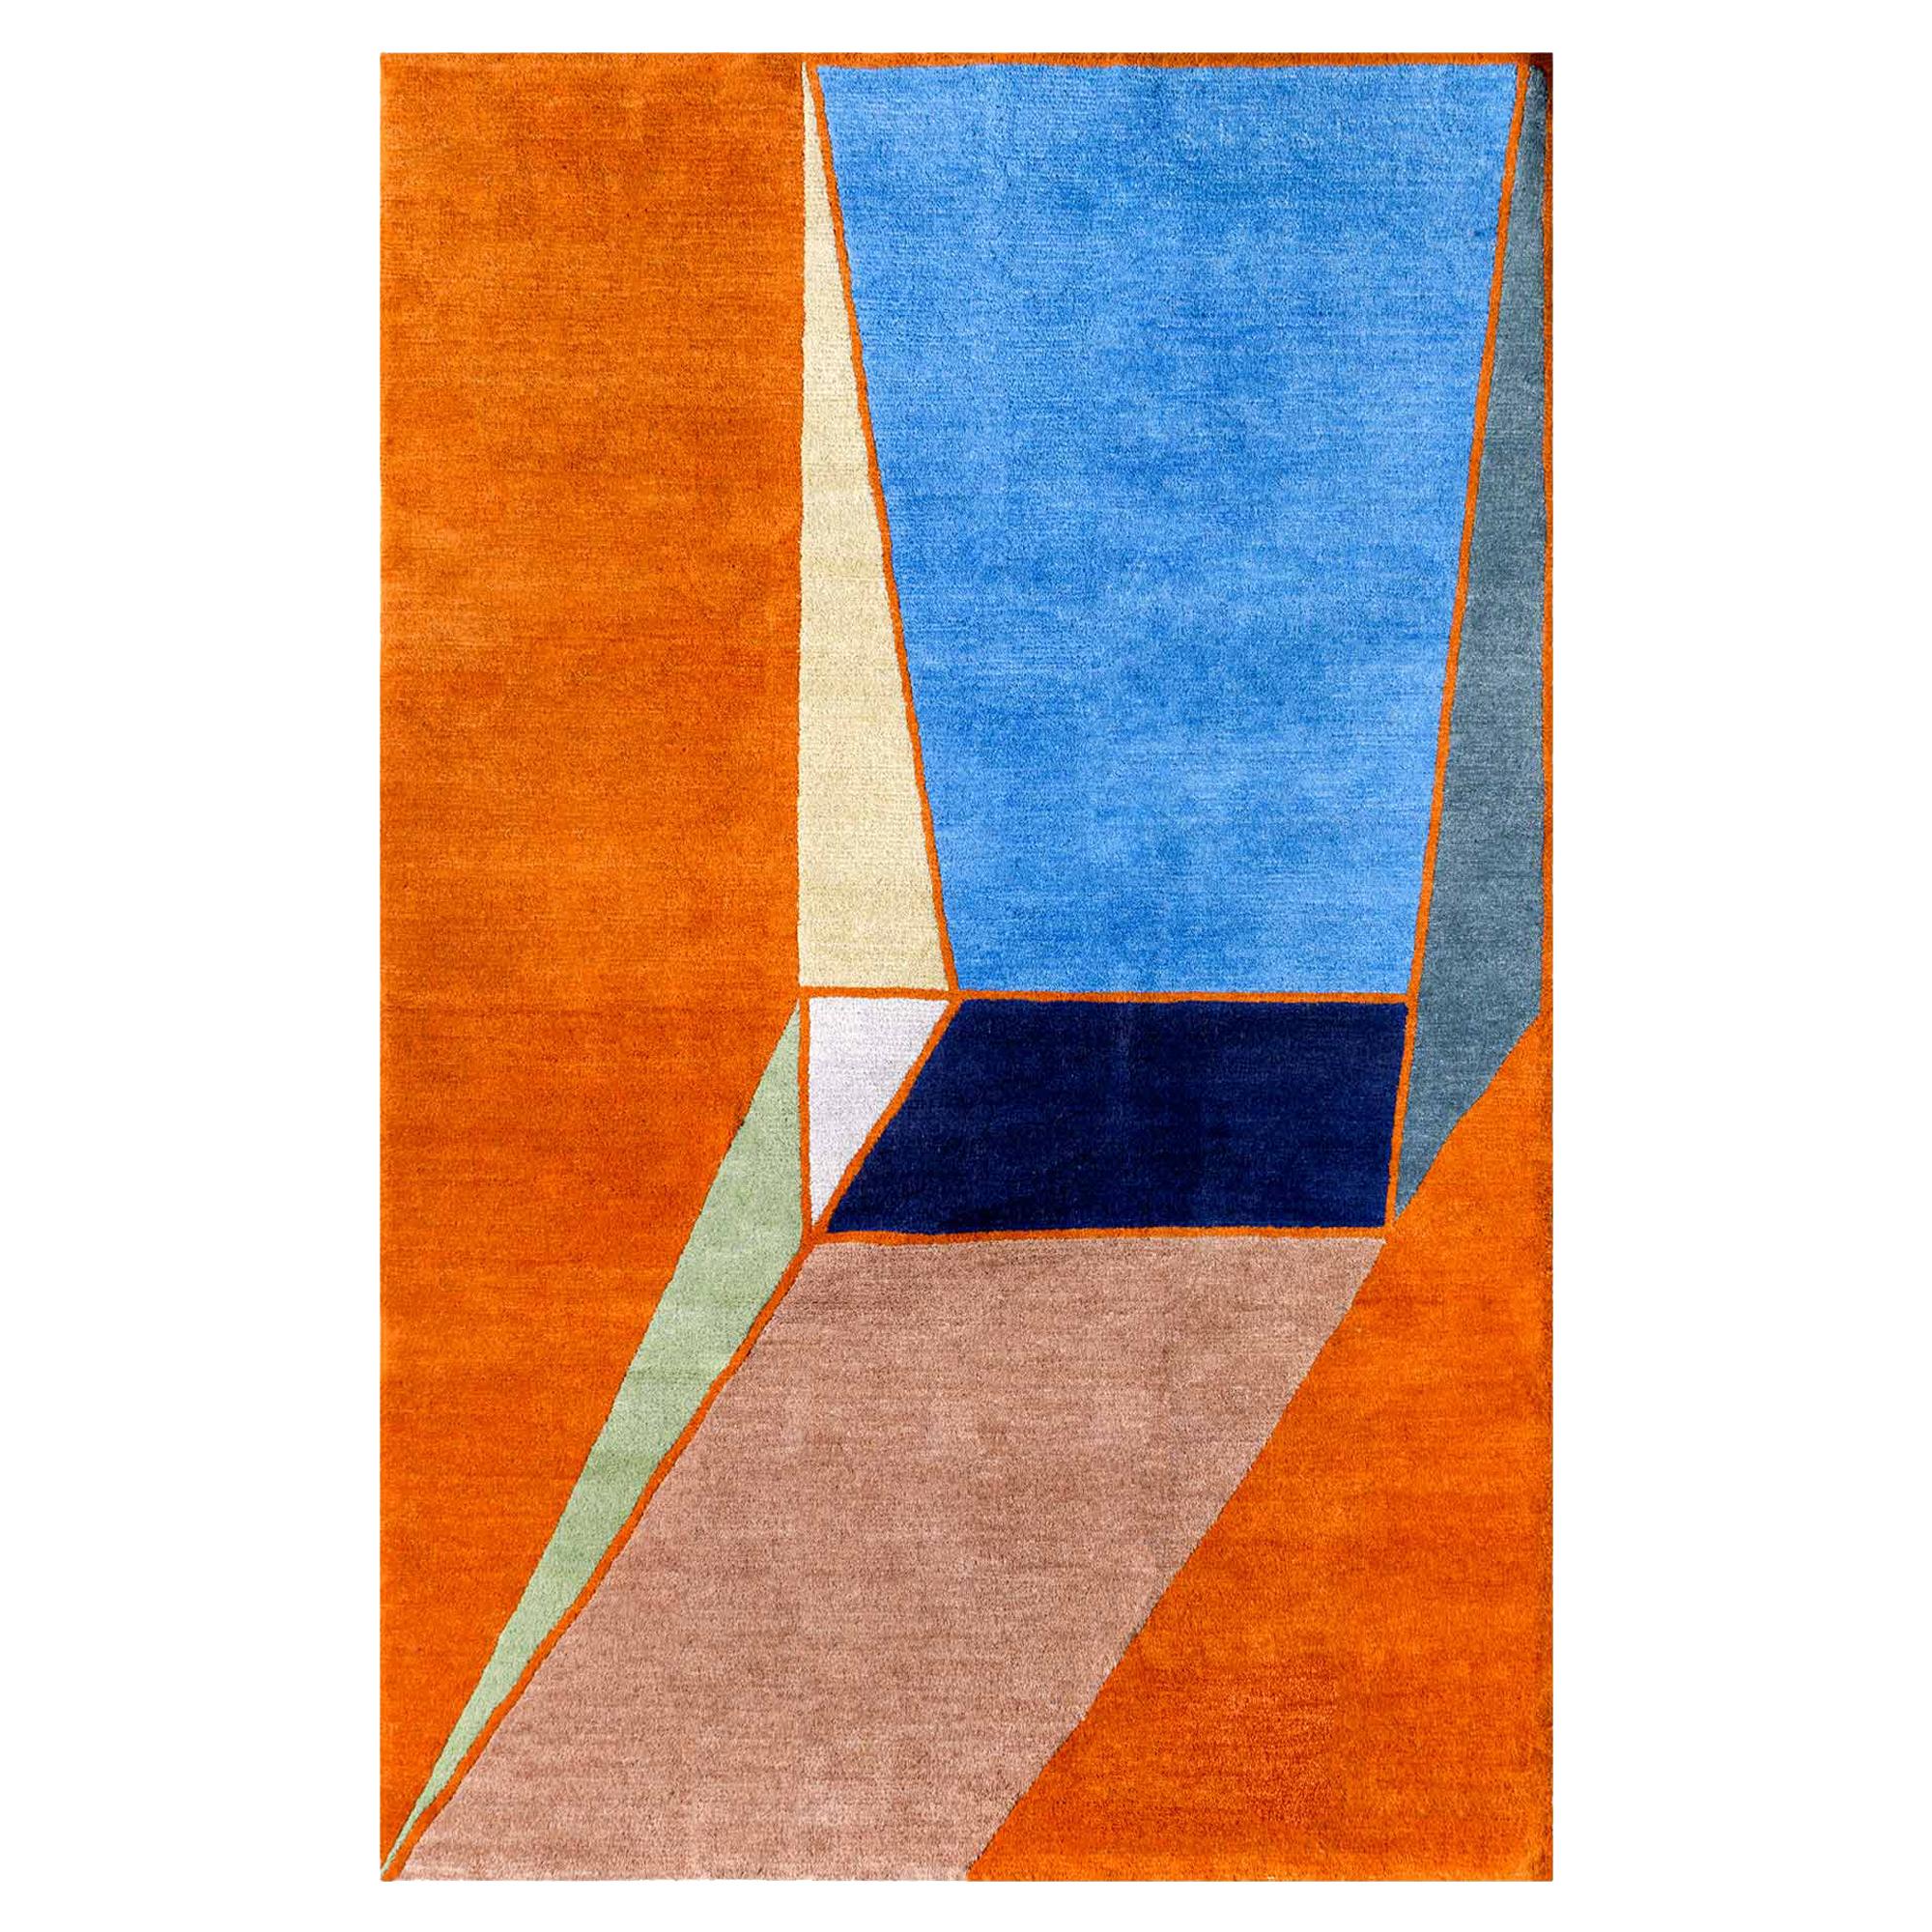 CEM4 Woollen Carpet by Chung Eun Mo for Post Design Collection/Memphis